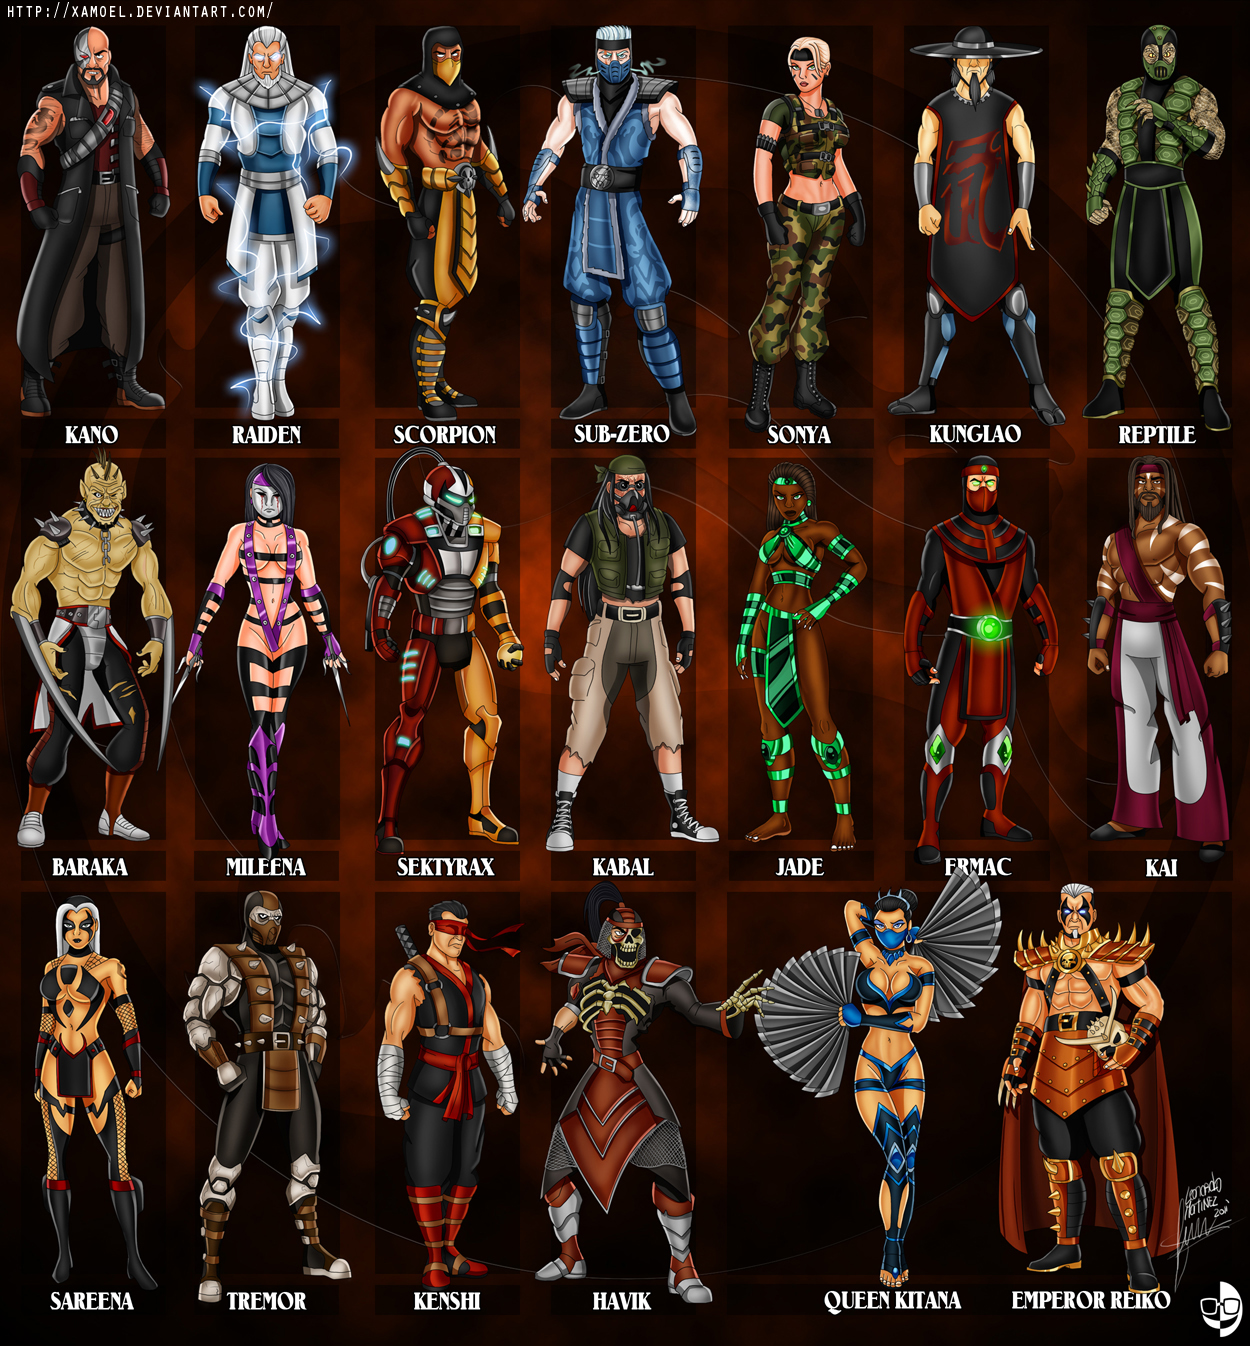 Could Baraka Be In Mortal Kombat X Kombat Pack 2 After All? - Mortal Kombat  Secrets